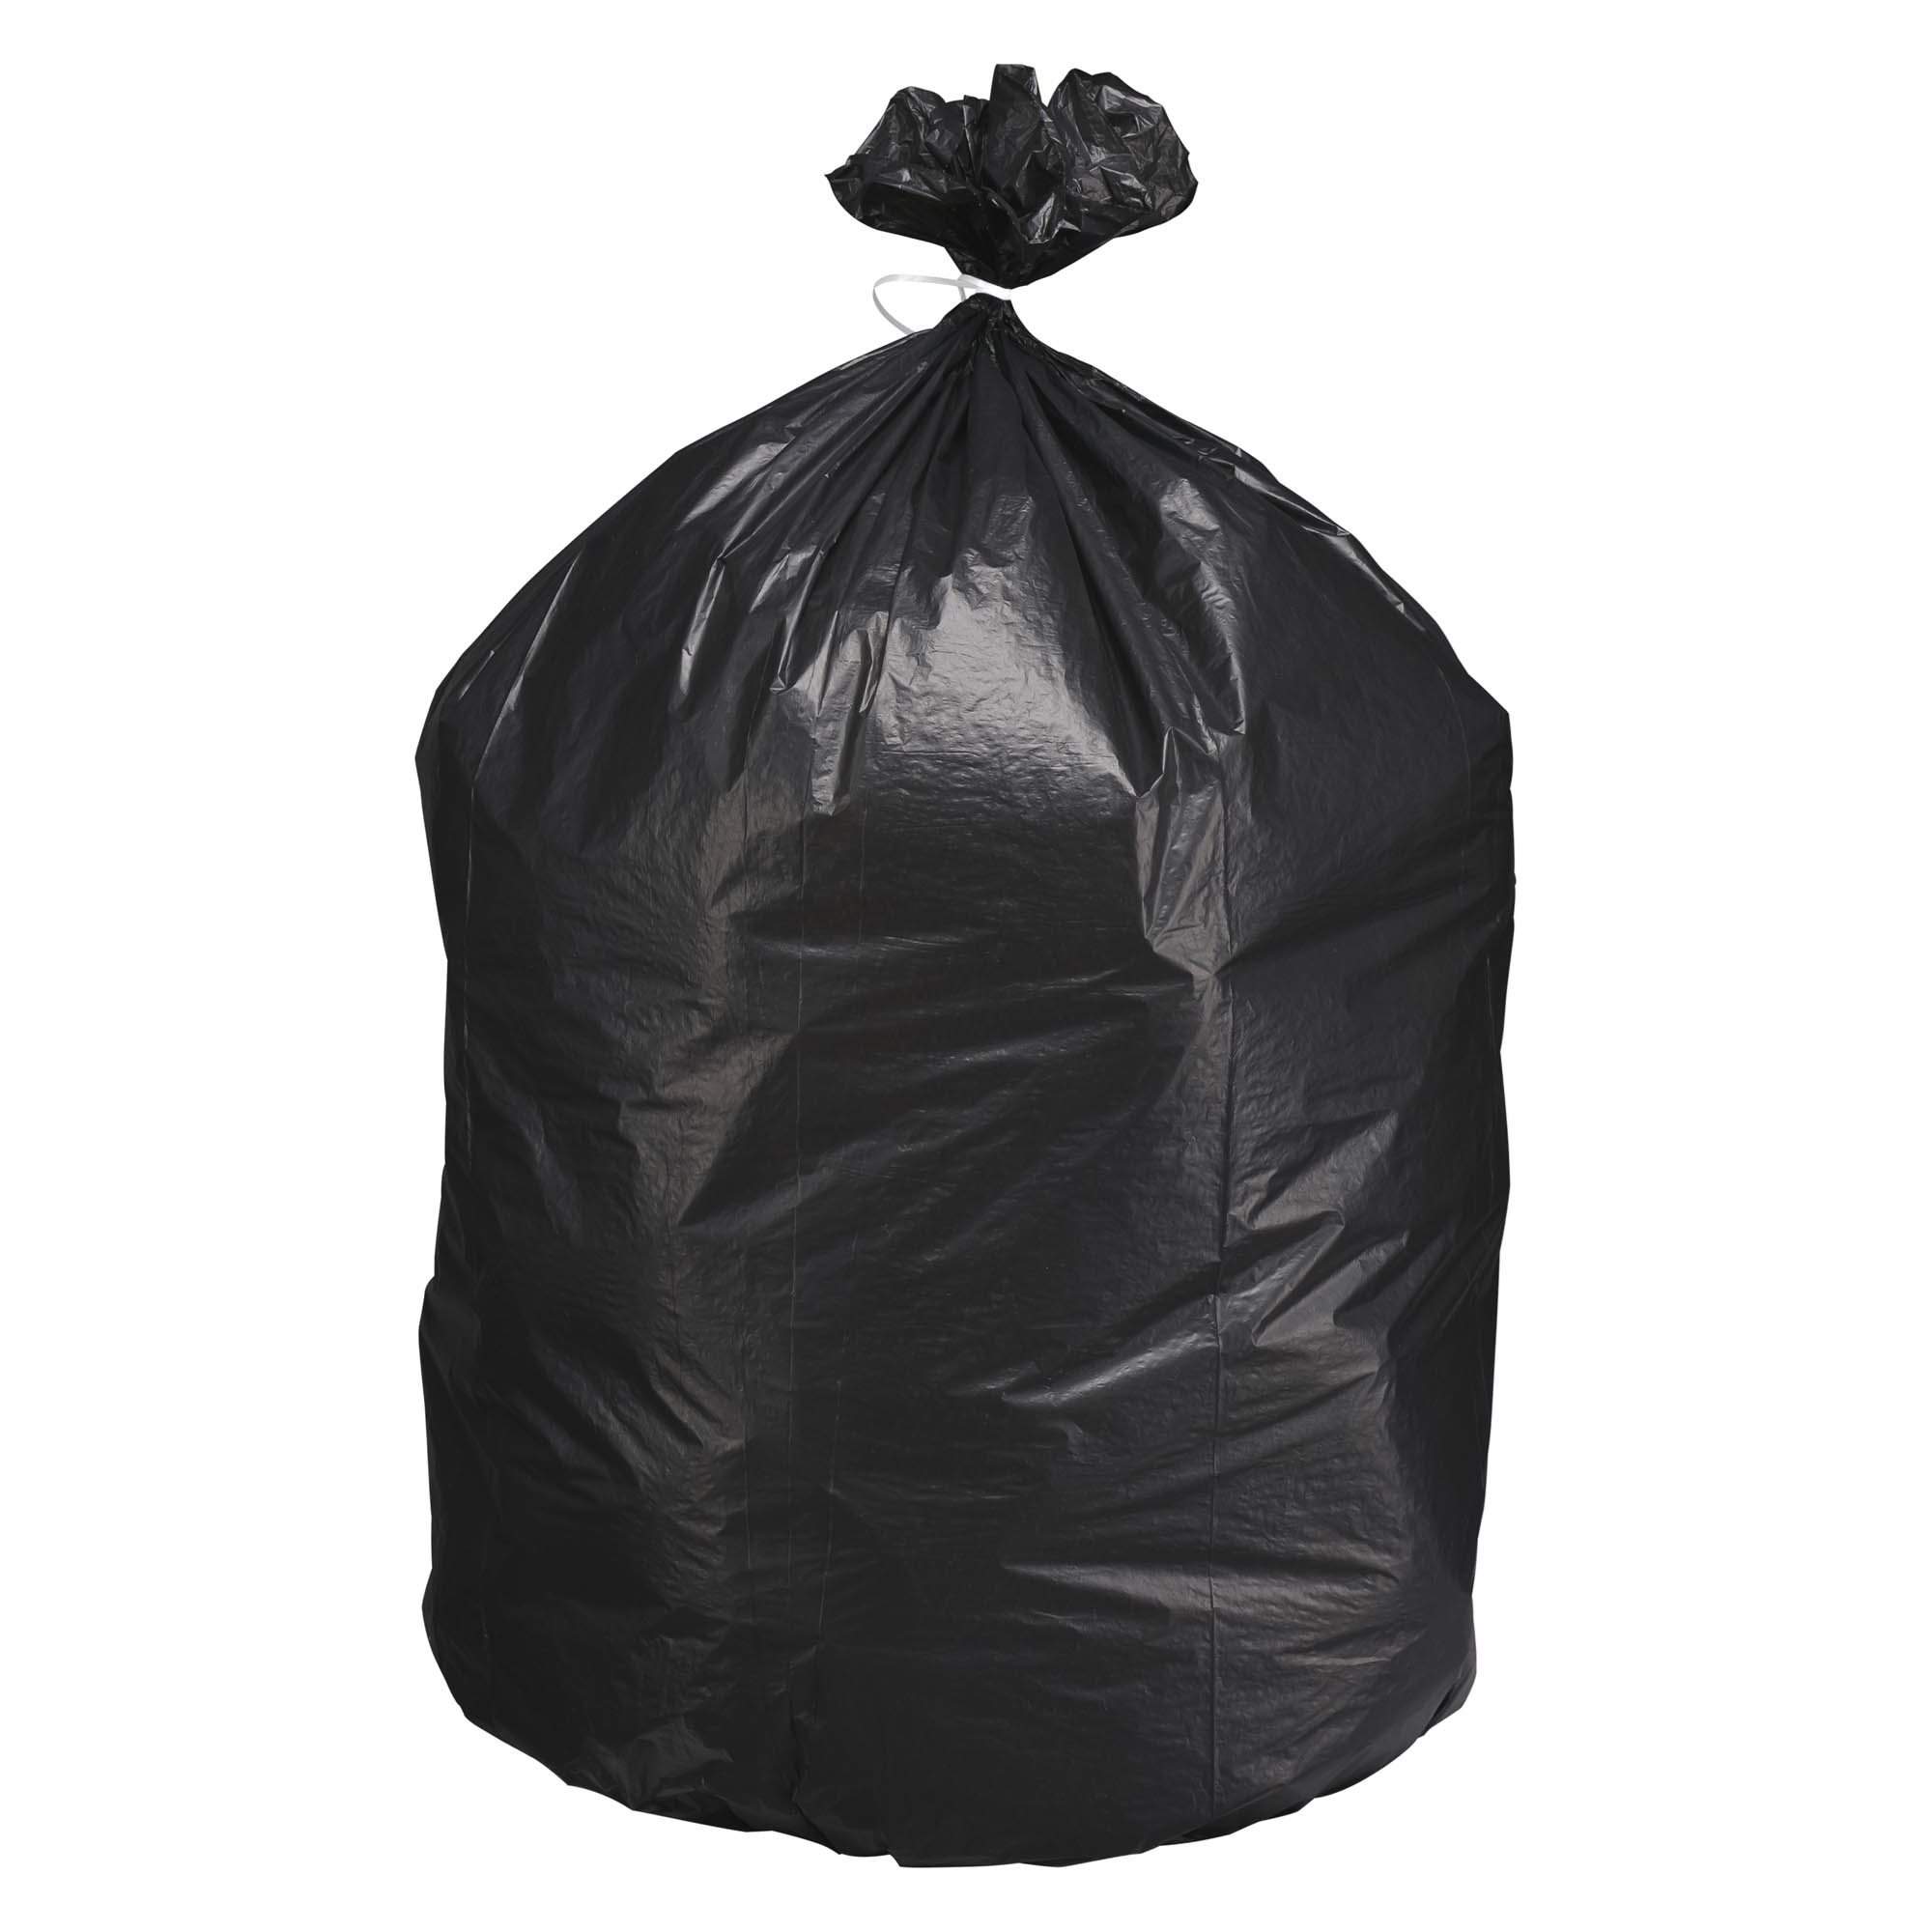 110 litre garbage bag - pack of 20 bags